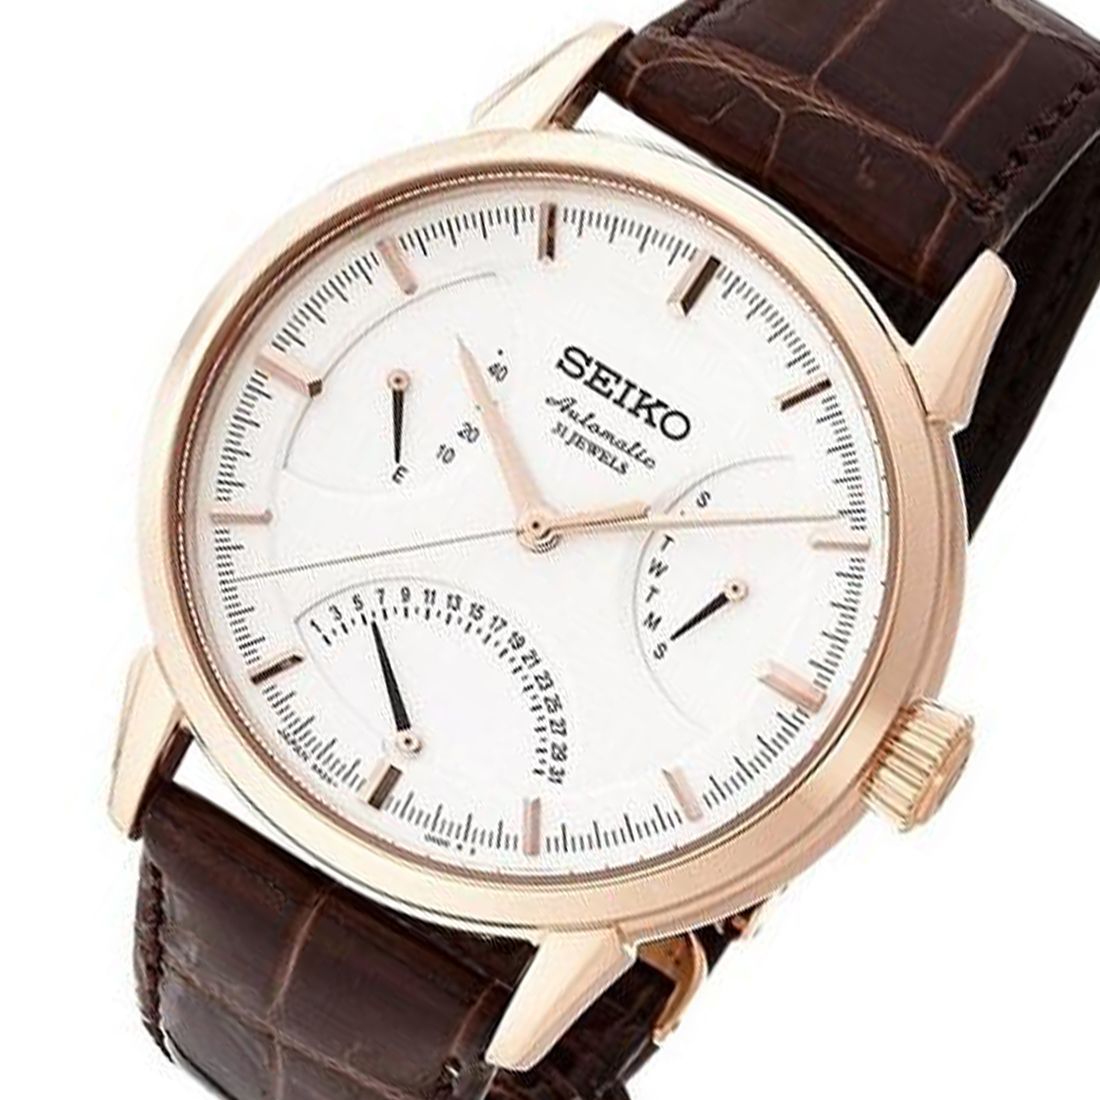 Seiko Presage Automatic 31 Jewels JDM Watch SARD006 (BACKORDER) -Seiko